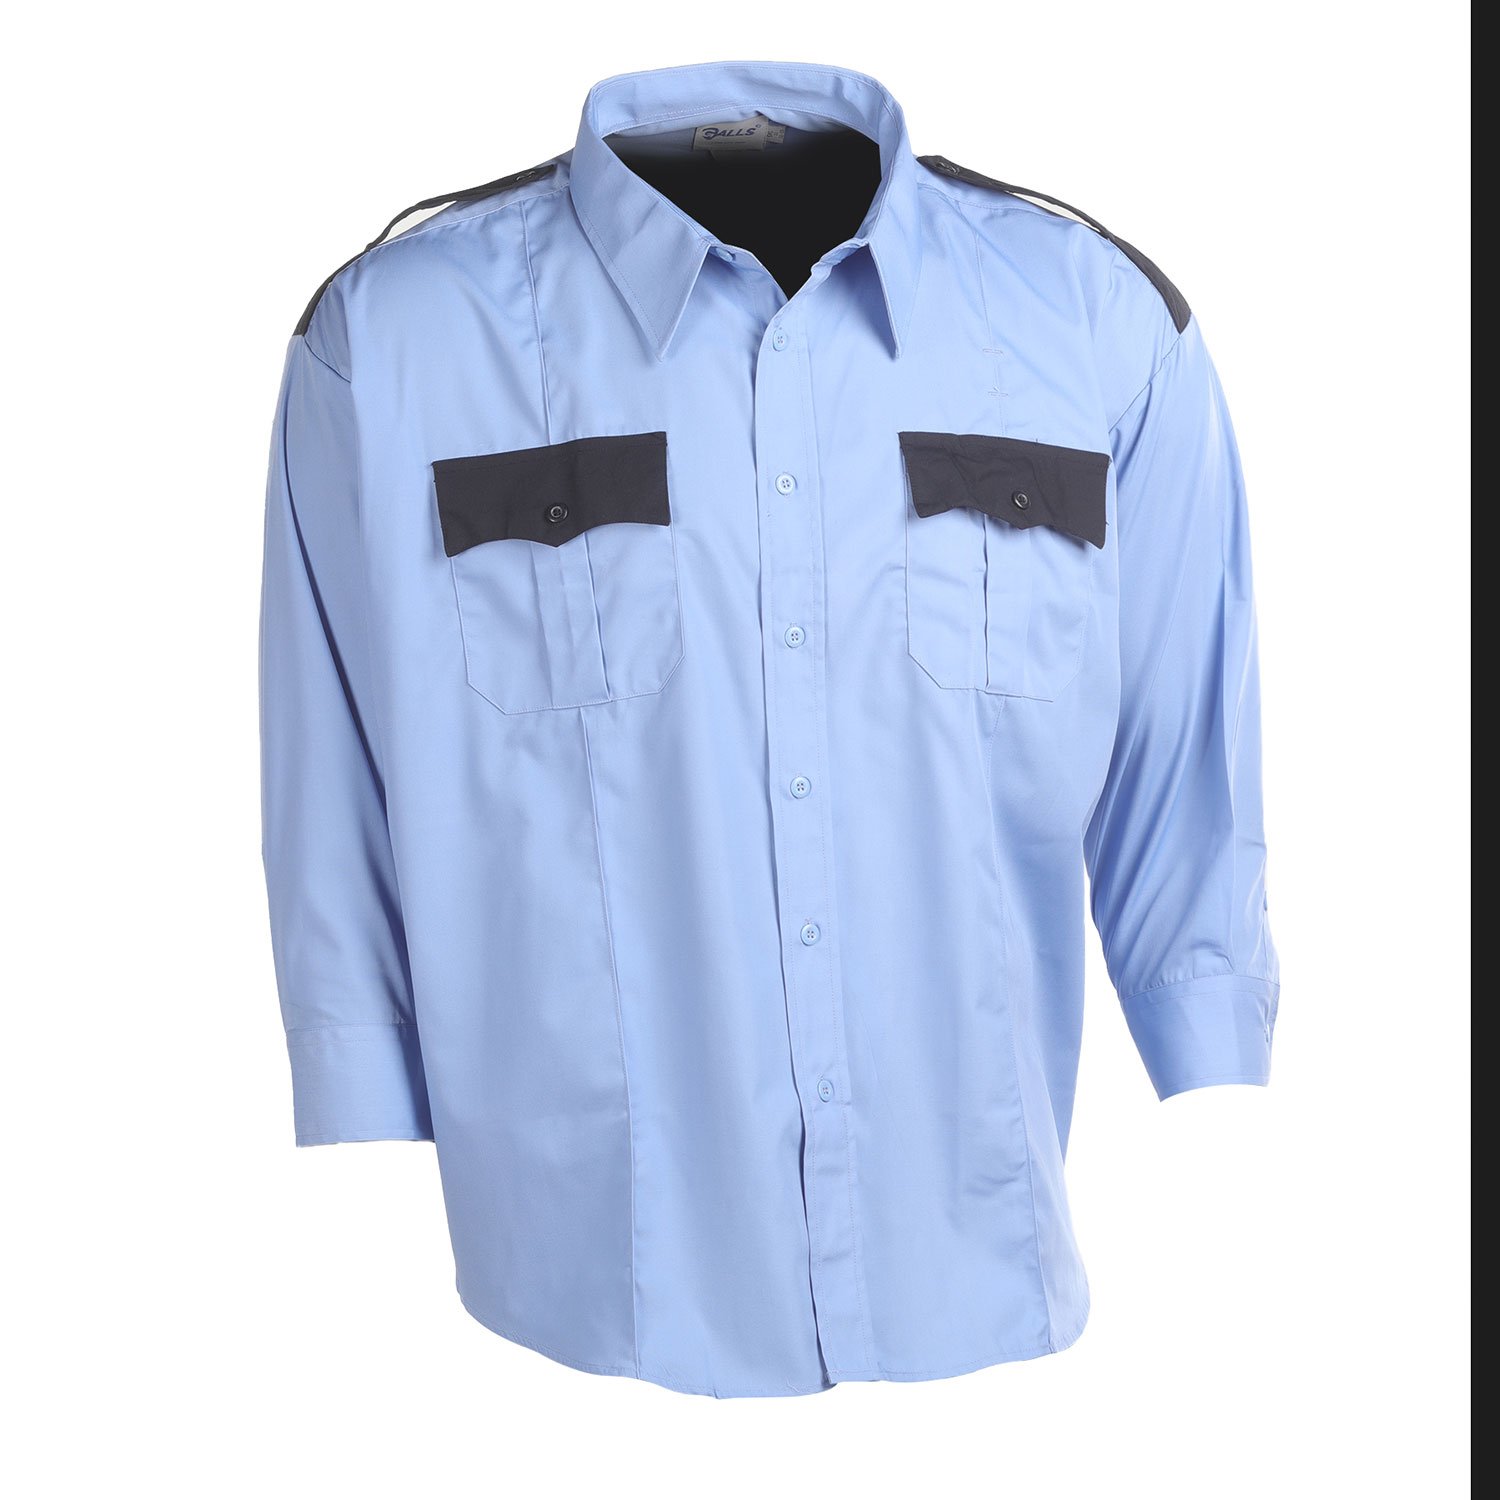 Galls Poly Cotton Long Sleeve Uniform Shirt